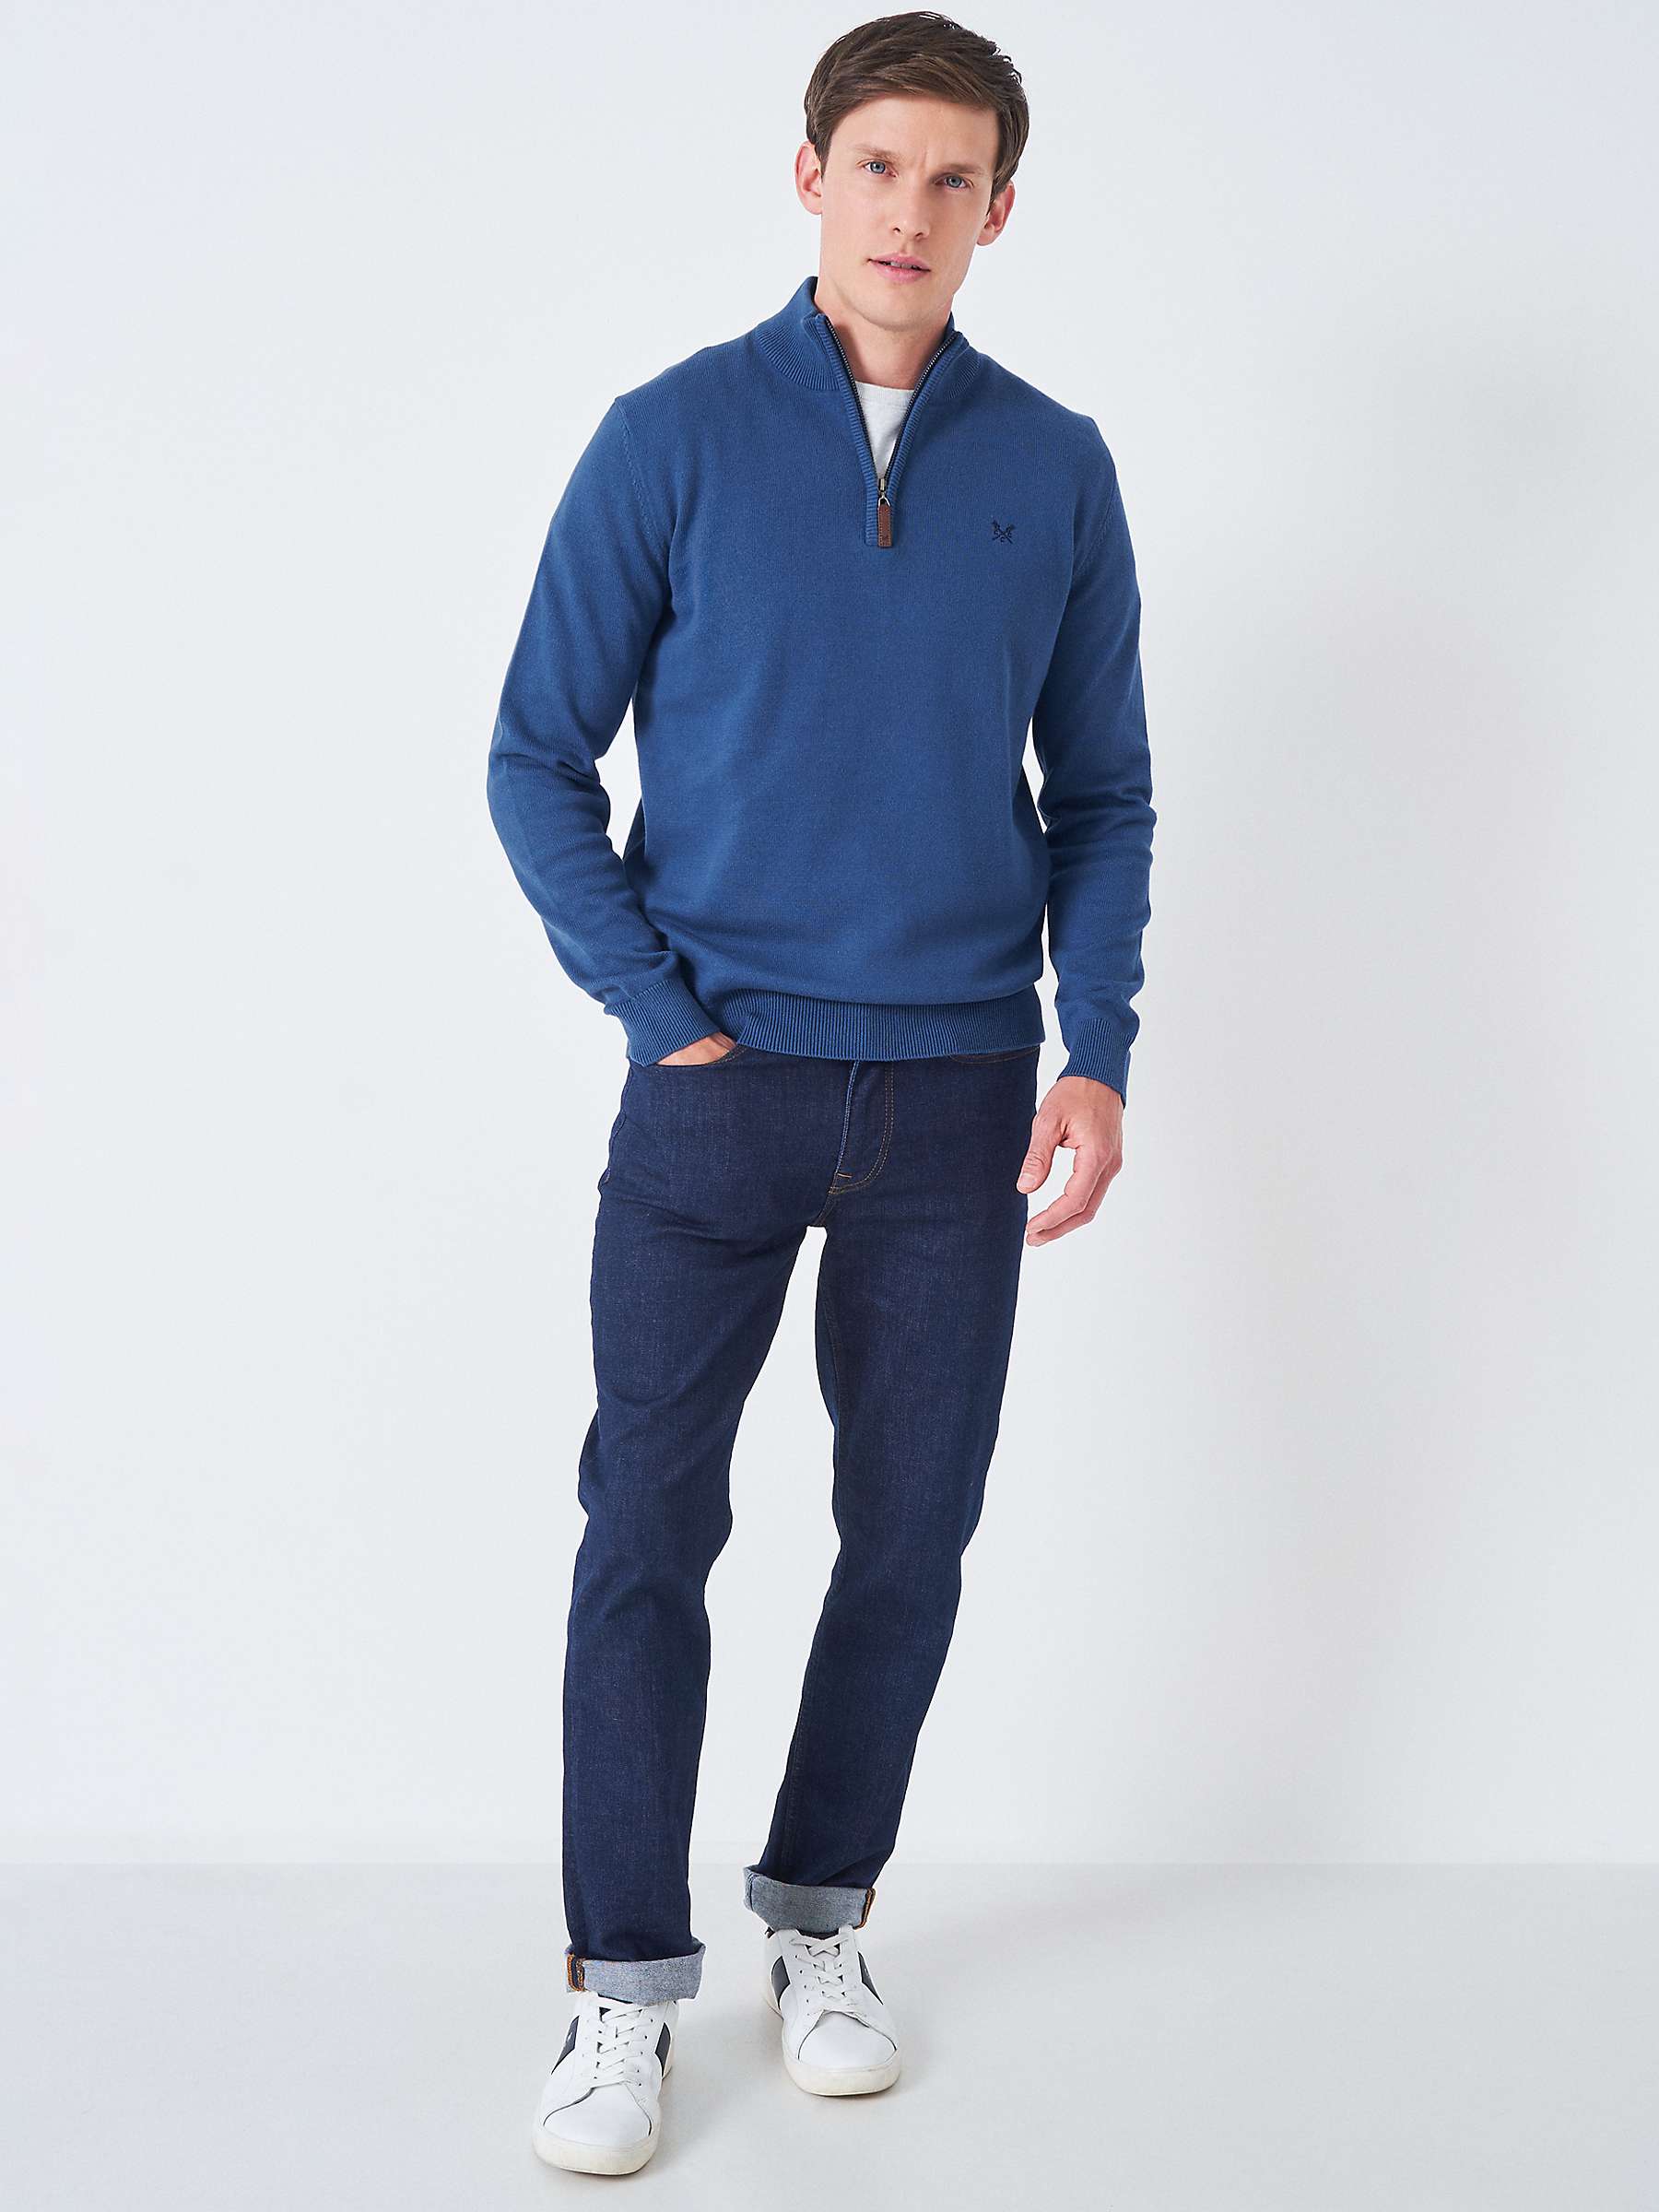 Crew Clothing Zip Neck Sweater, Dark Blue at John Lewis & Partners